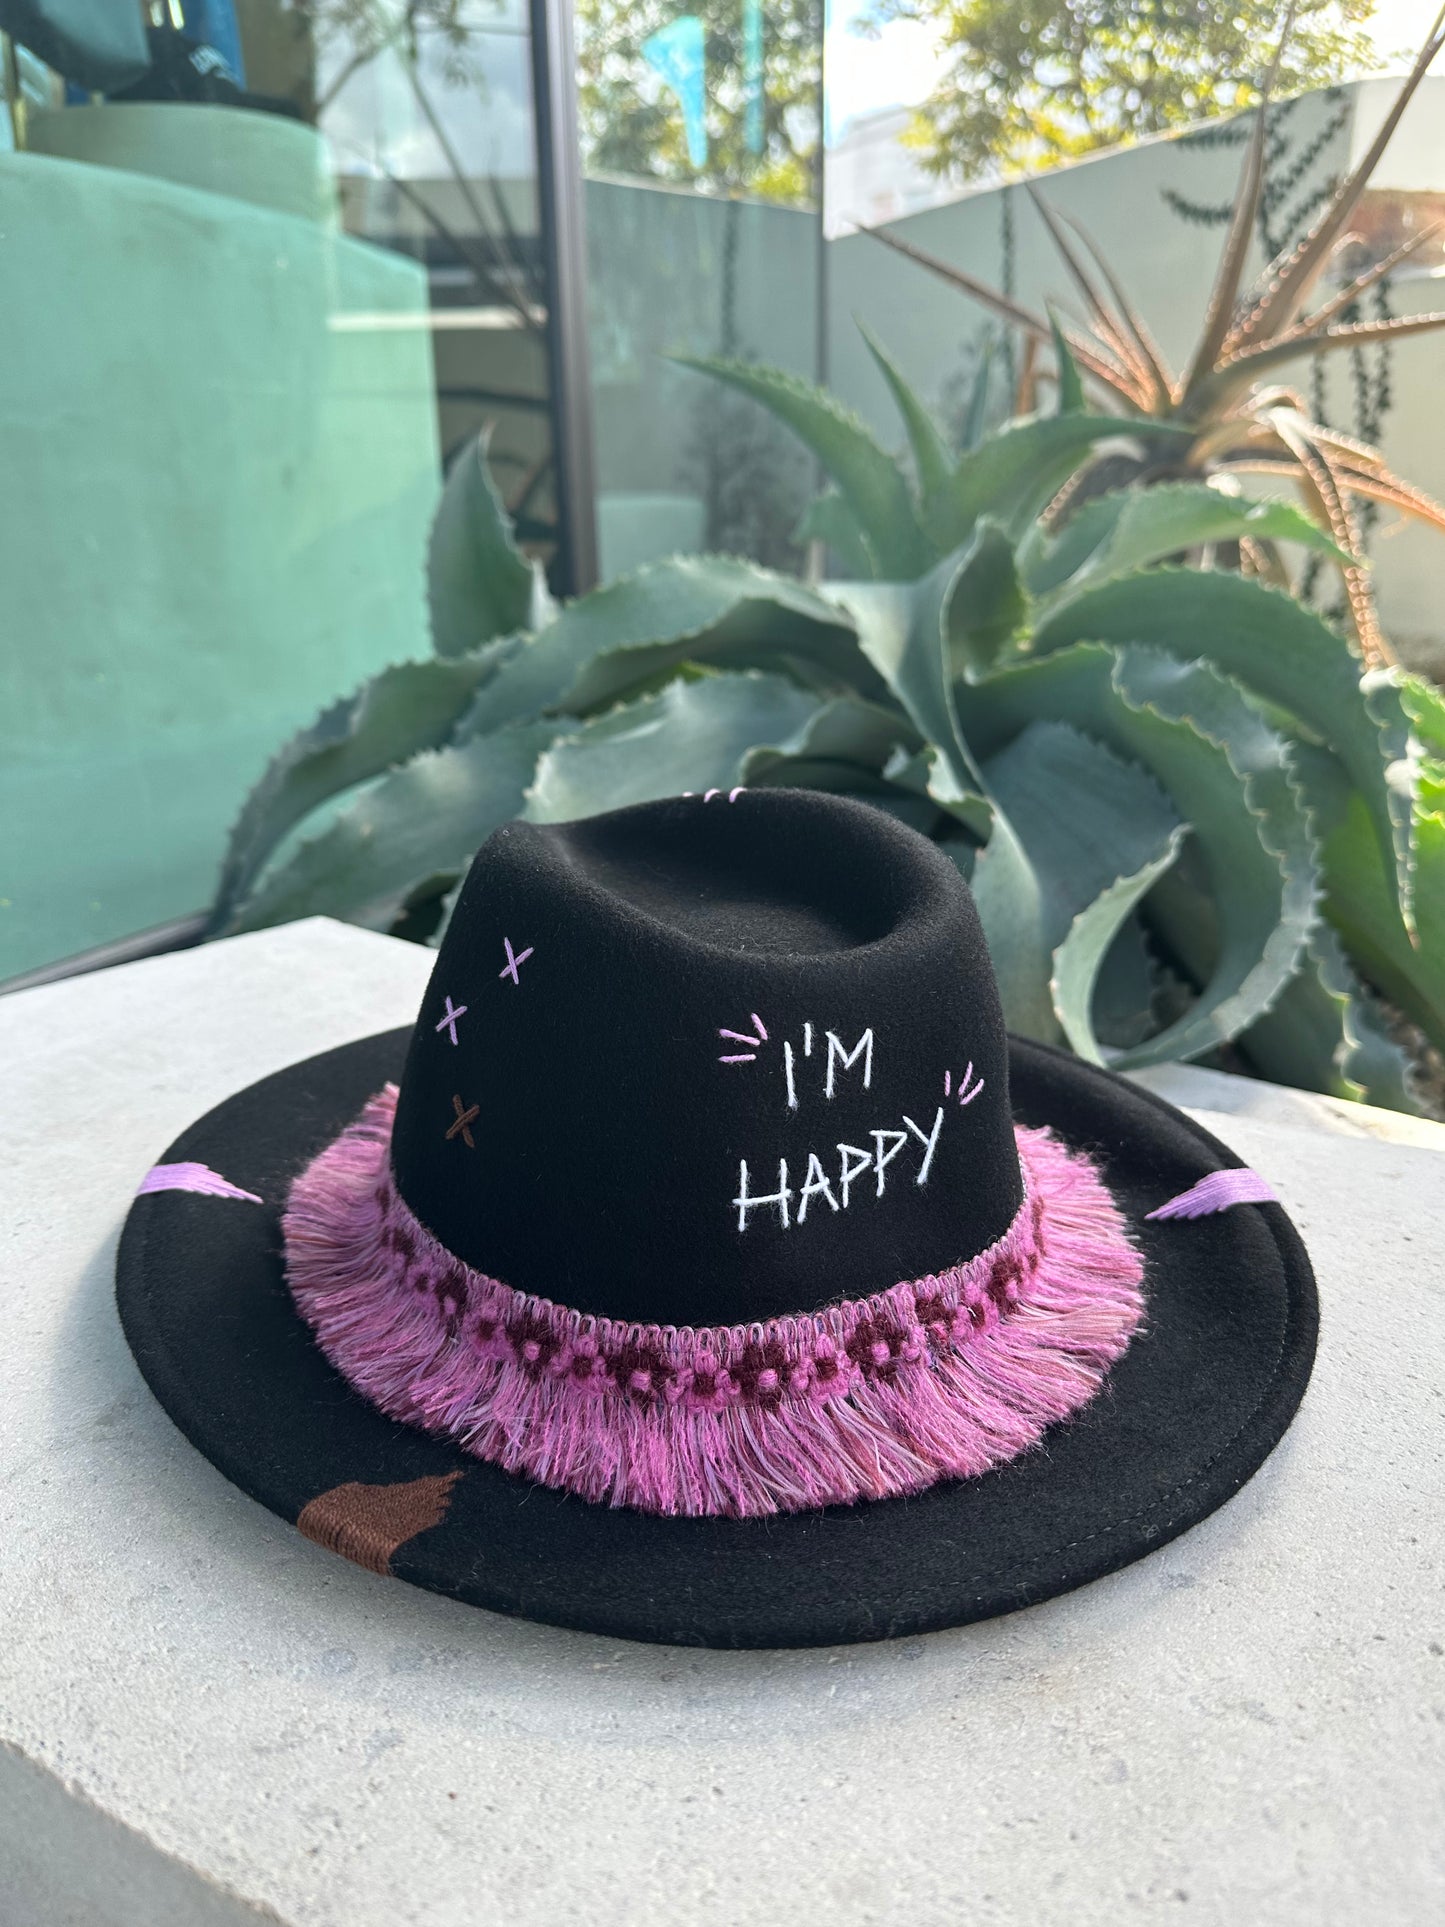 'I'M HAPPY' HAT - BLACK